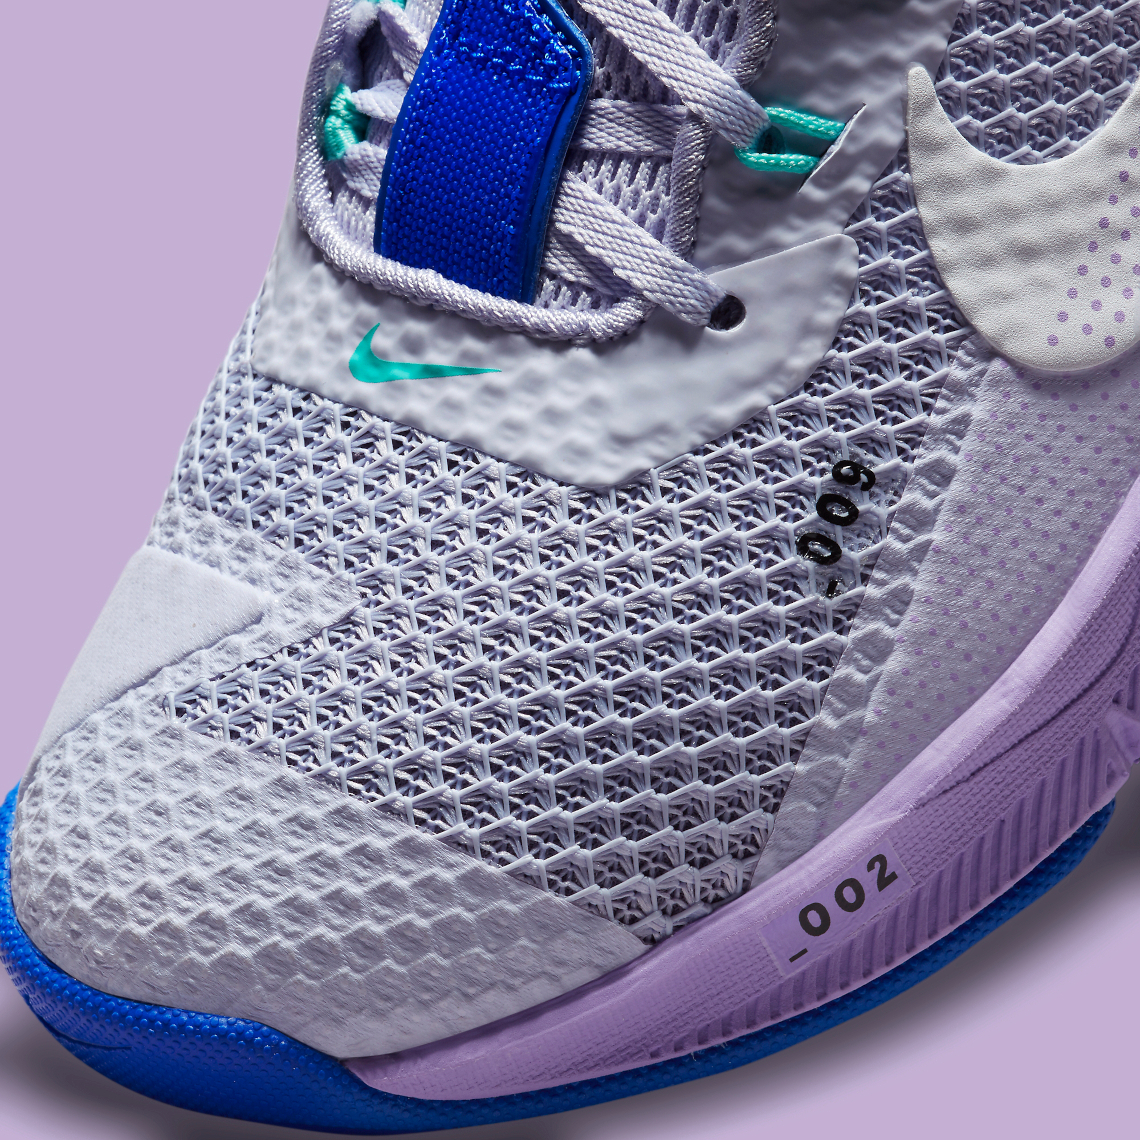 Nike MetCon 7 "Purple"